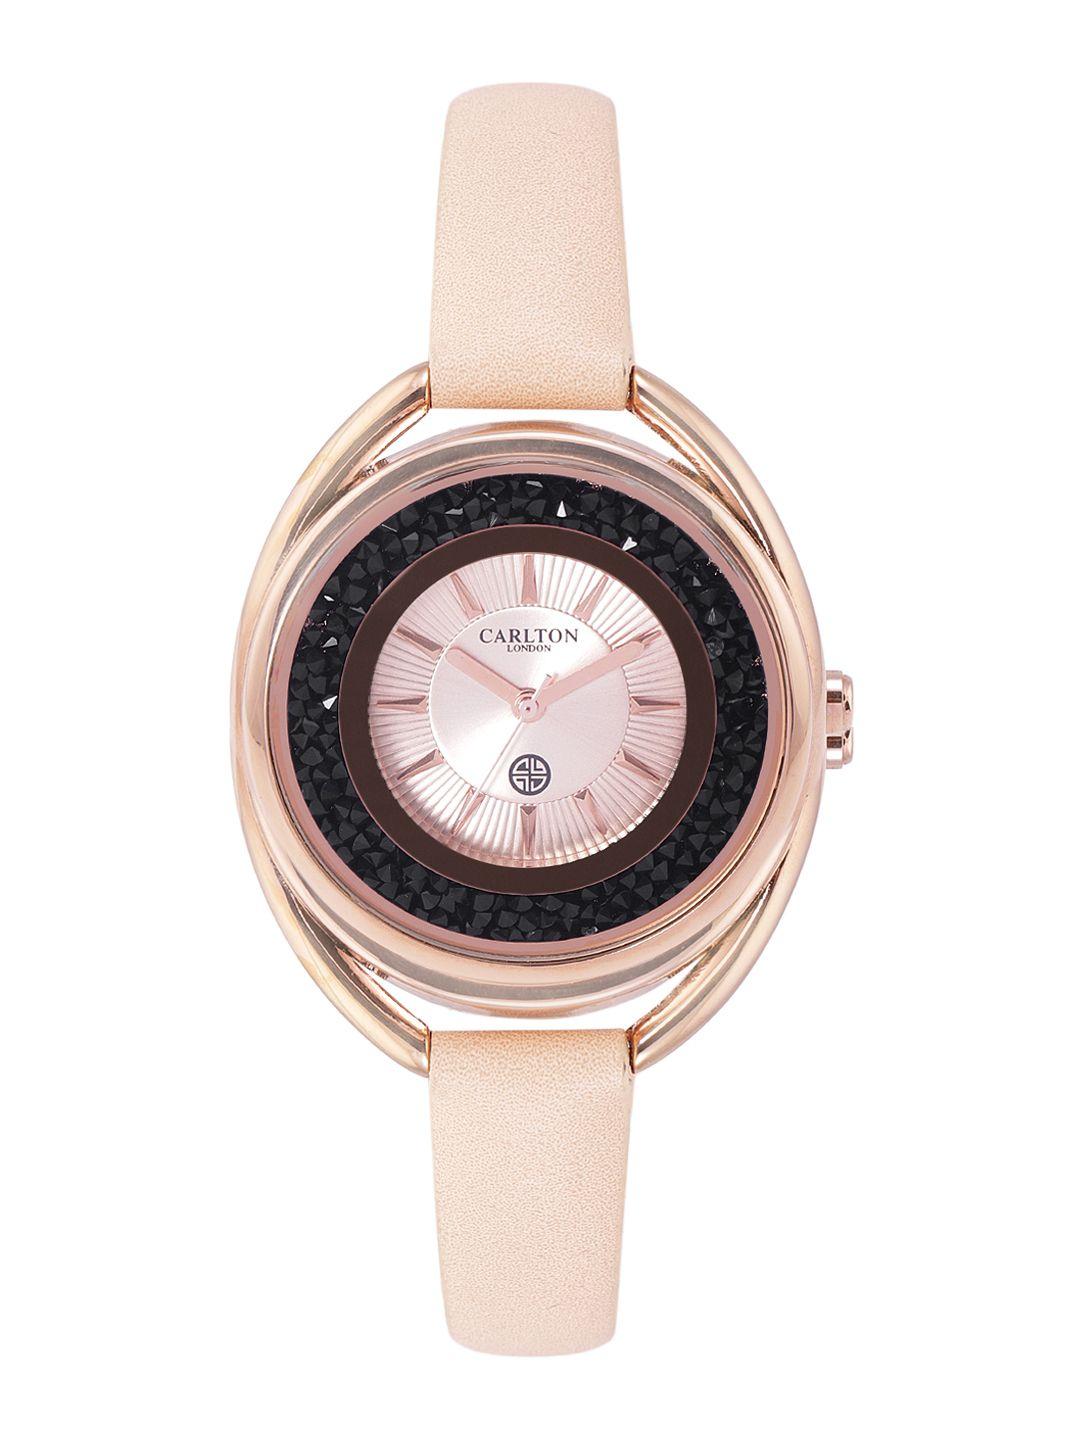 carlton-london-women-rose-gold-textured-analogue-watch-cl029rrobs